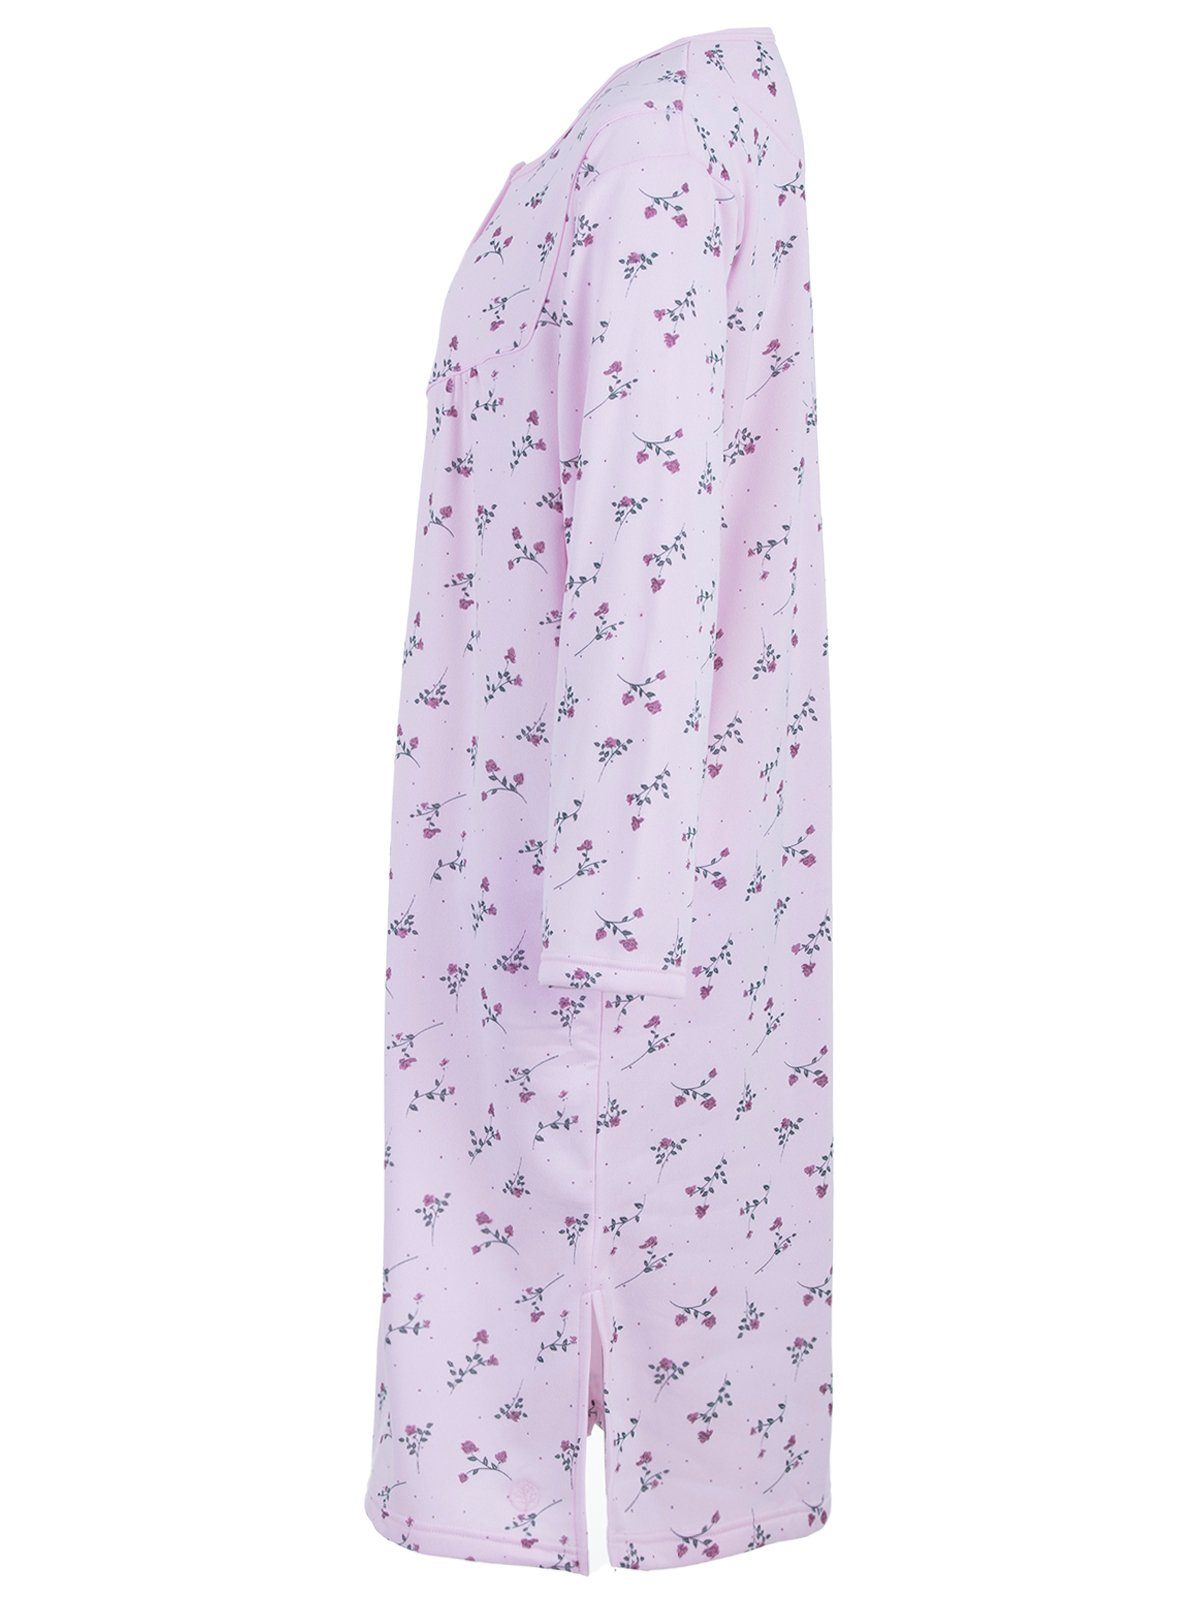 zeitlos Nachthemd Thermo Nachthemd - Paspel Blumen rosa